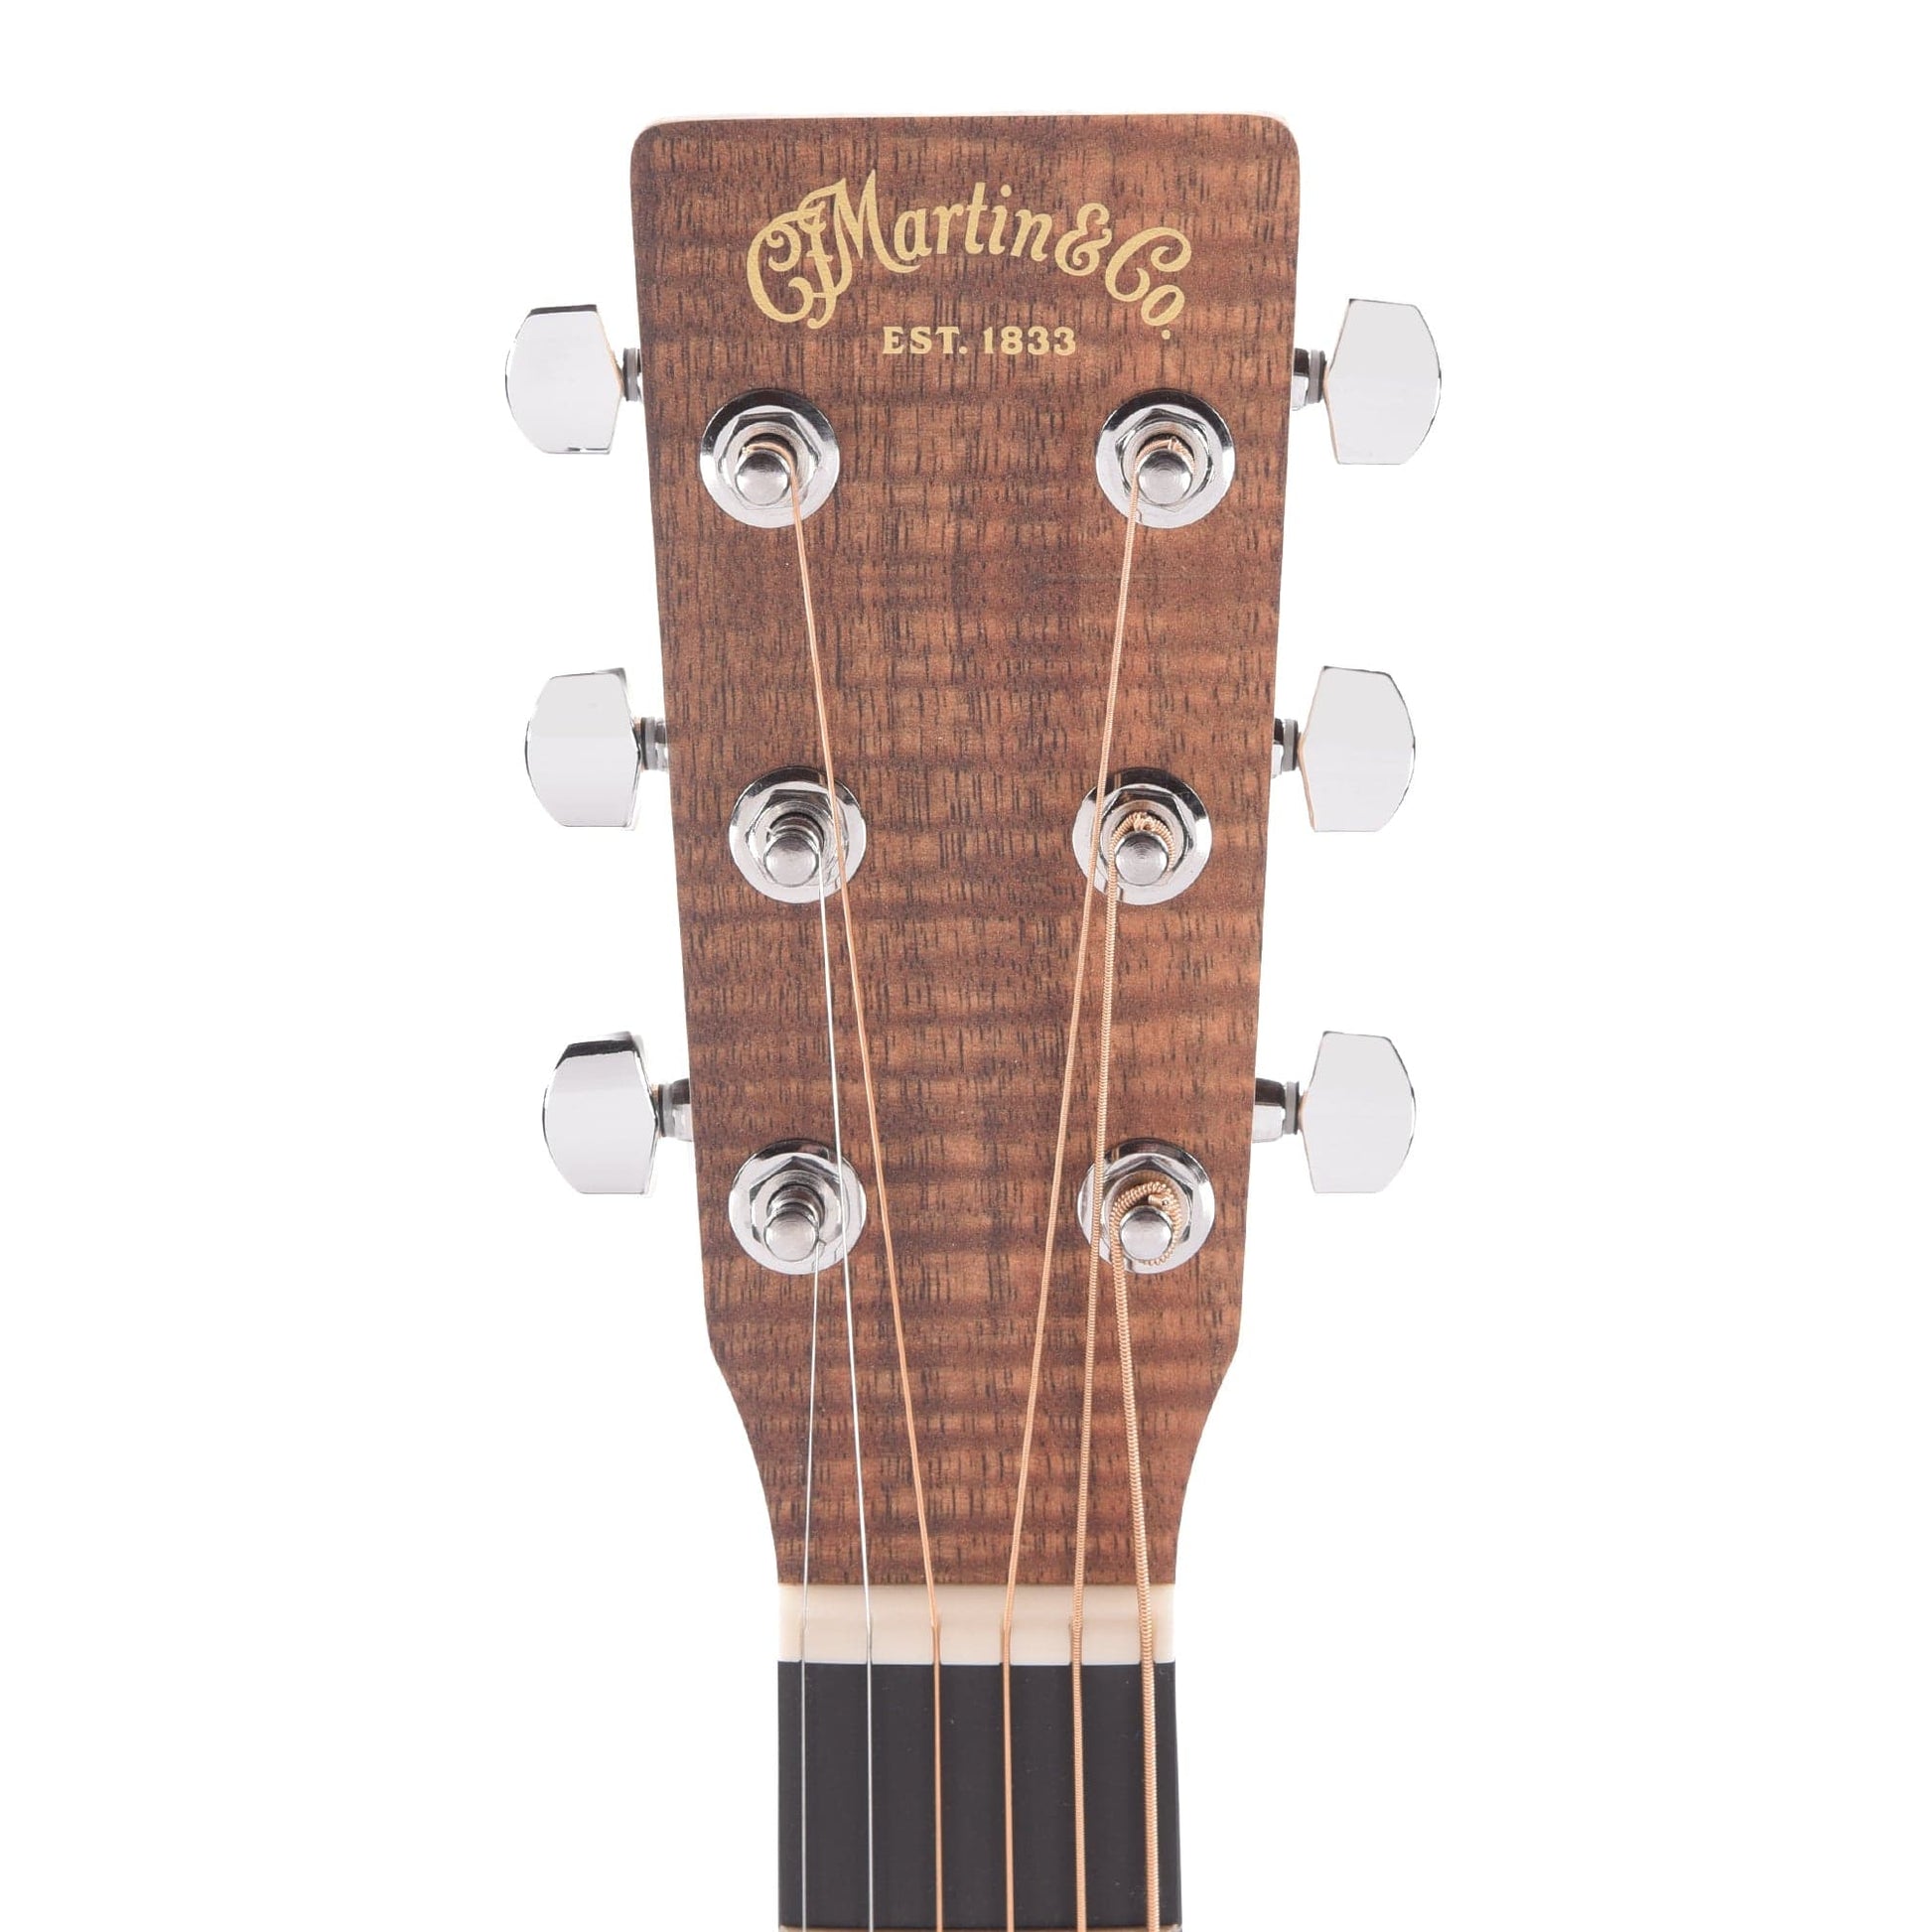 Martin Special Summer X Series HPL Koa Concert Natural LEFTY Acoustic Guitars / Left-Handed